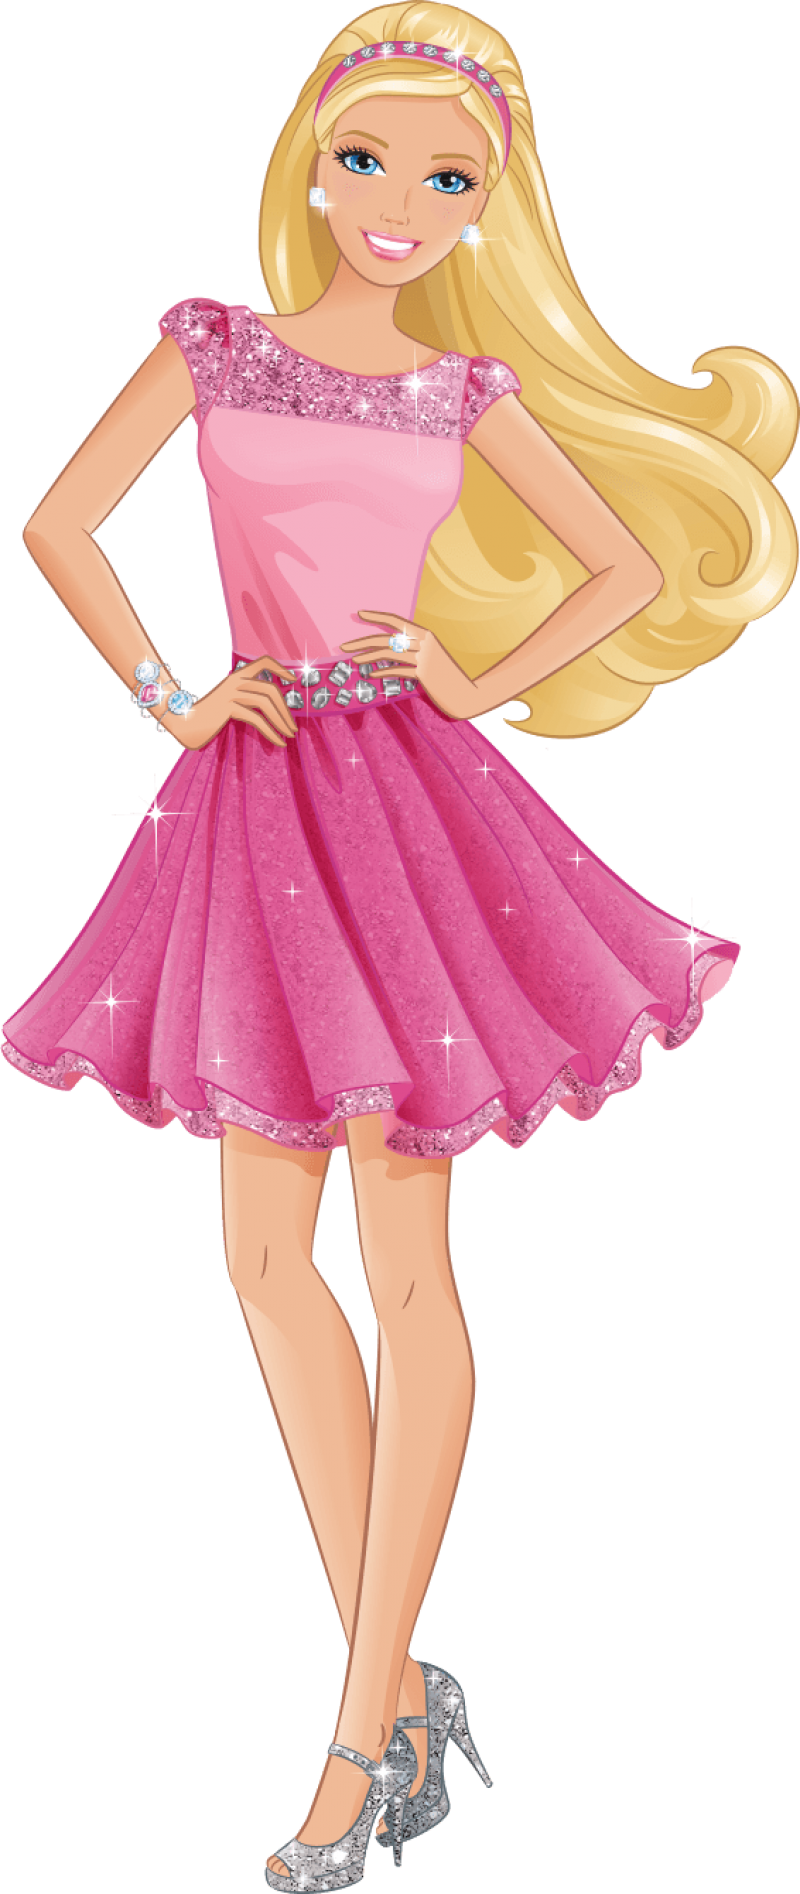 Barbie PNG Image - PurePNG | Free transparent CC0 PNG ...